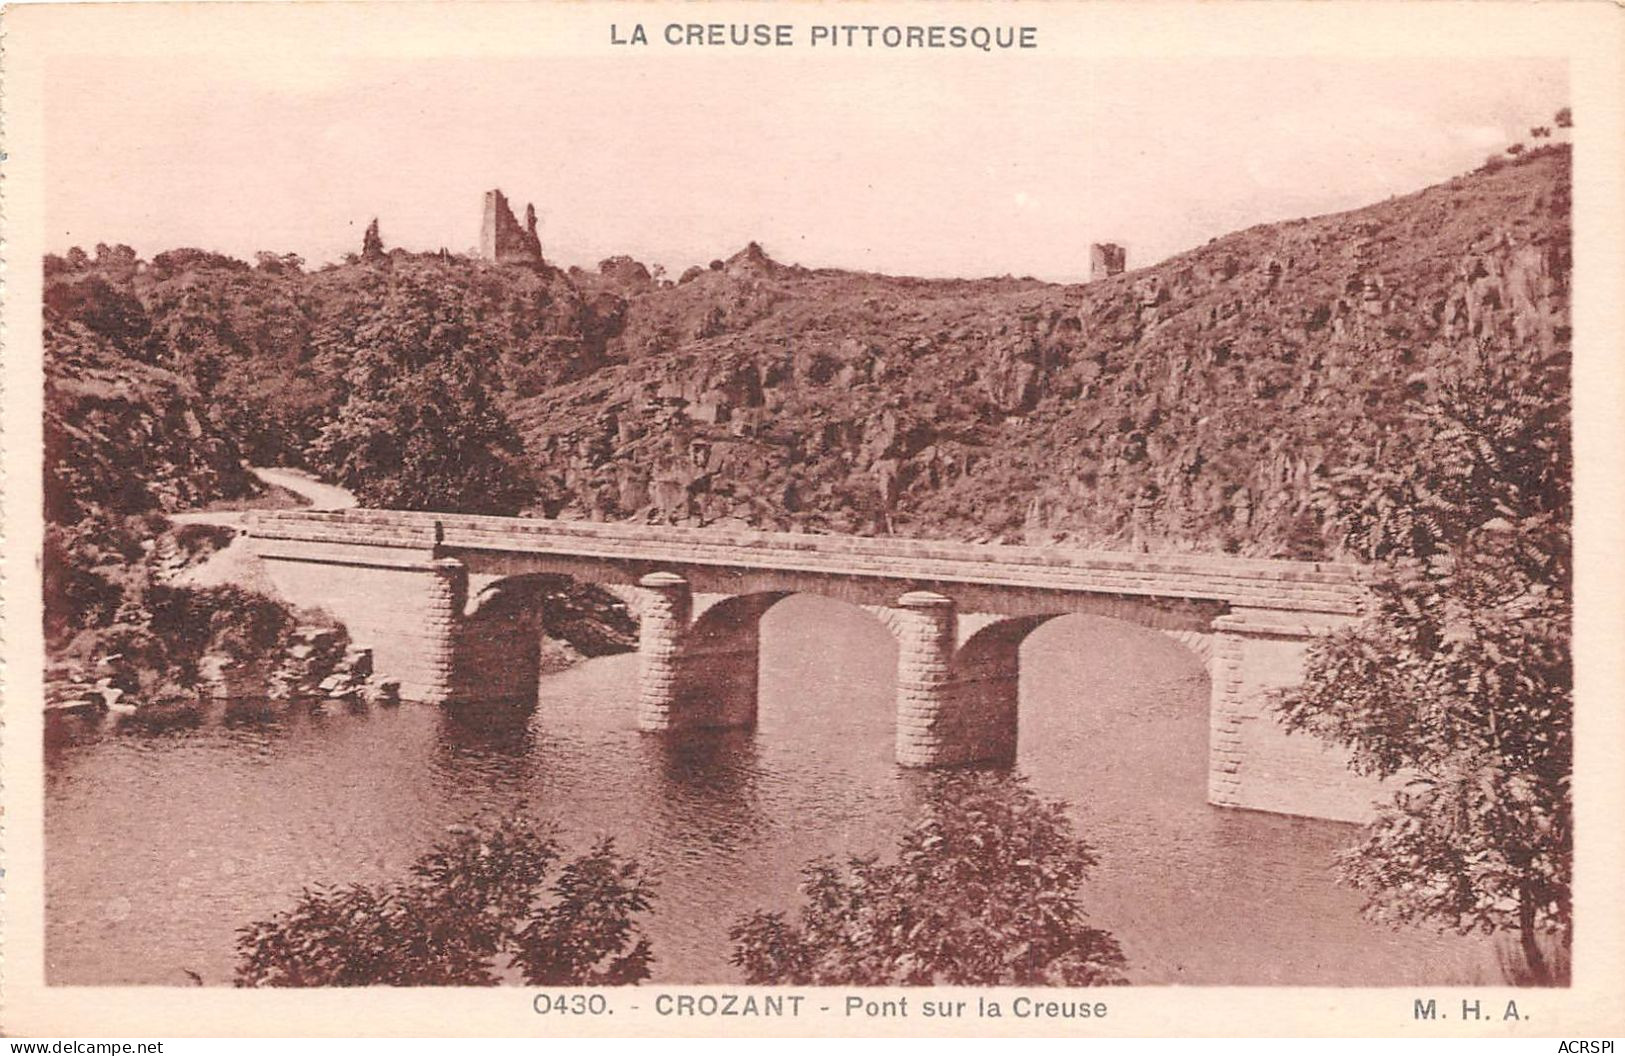 La Creuse Pitoresque Crozant Pont Sur La Creuse(SCAN RECTO VERSO) NONO0056 - Crozant